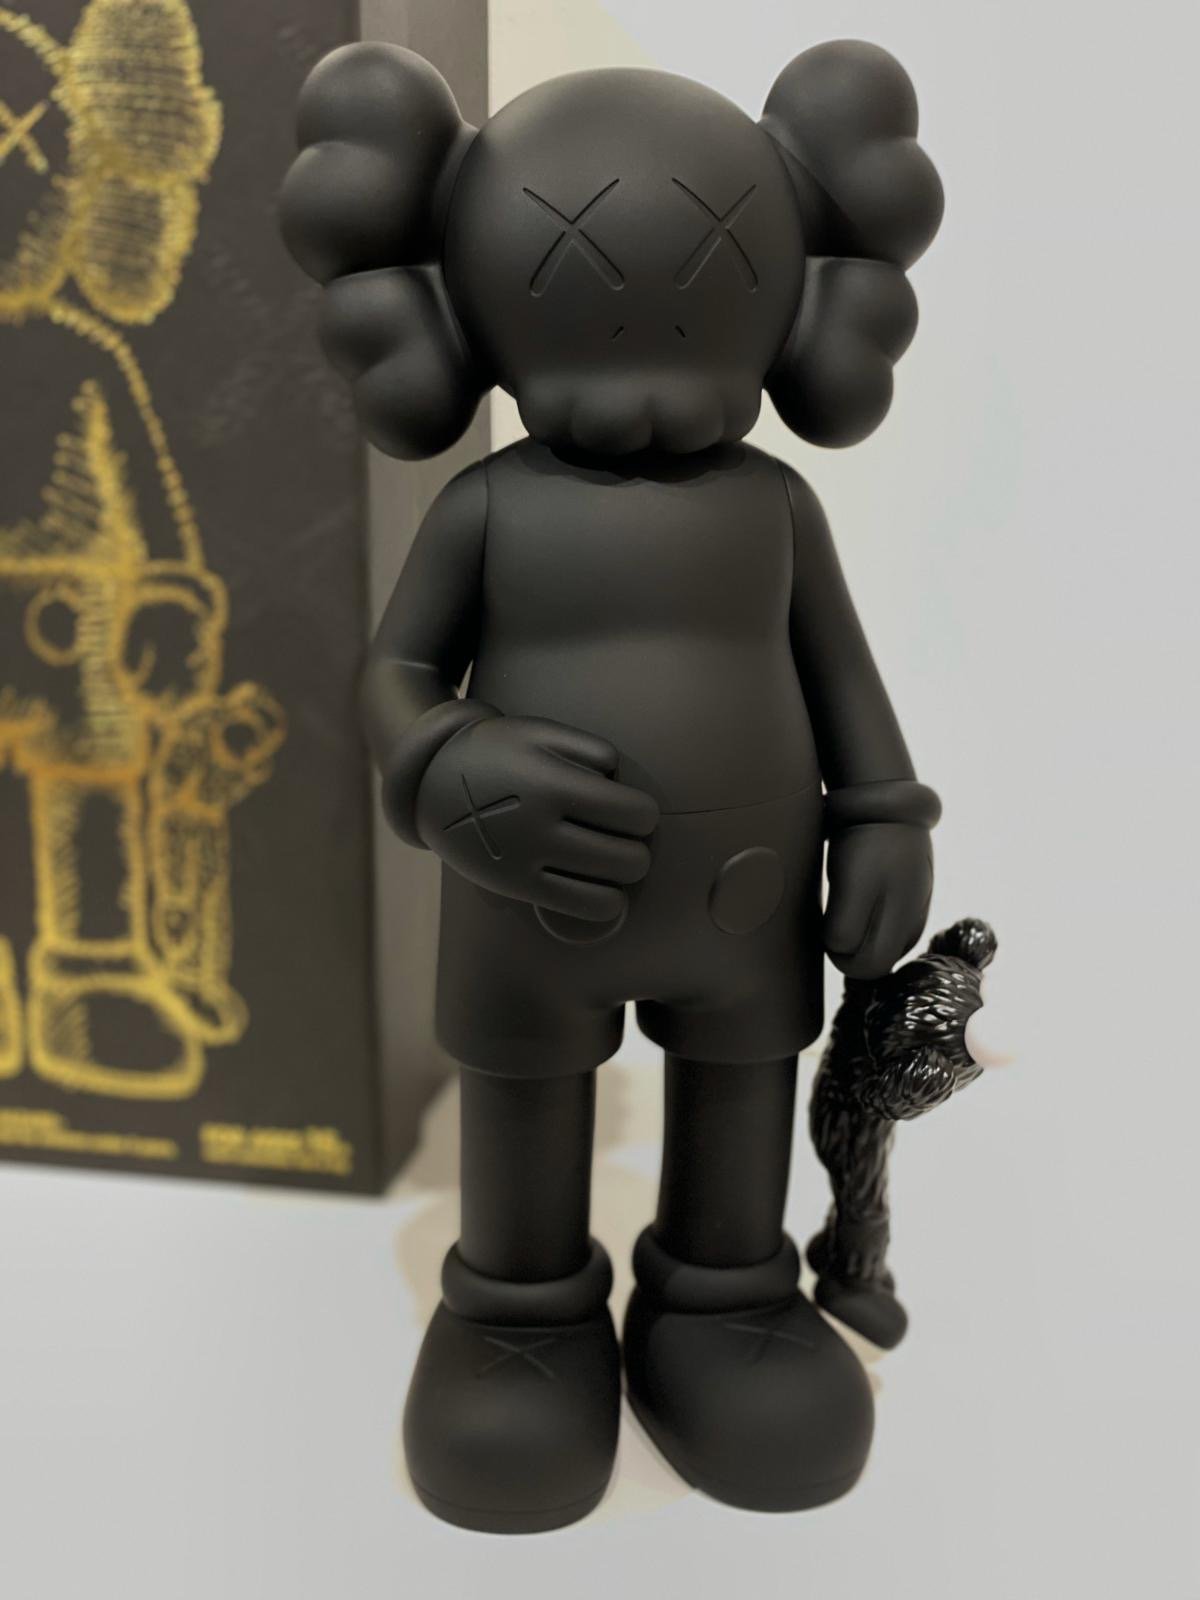 KAWS Share Vinyl Figure Black